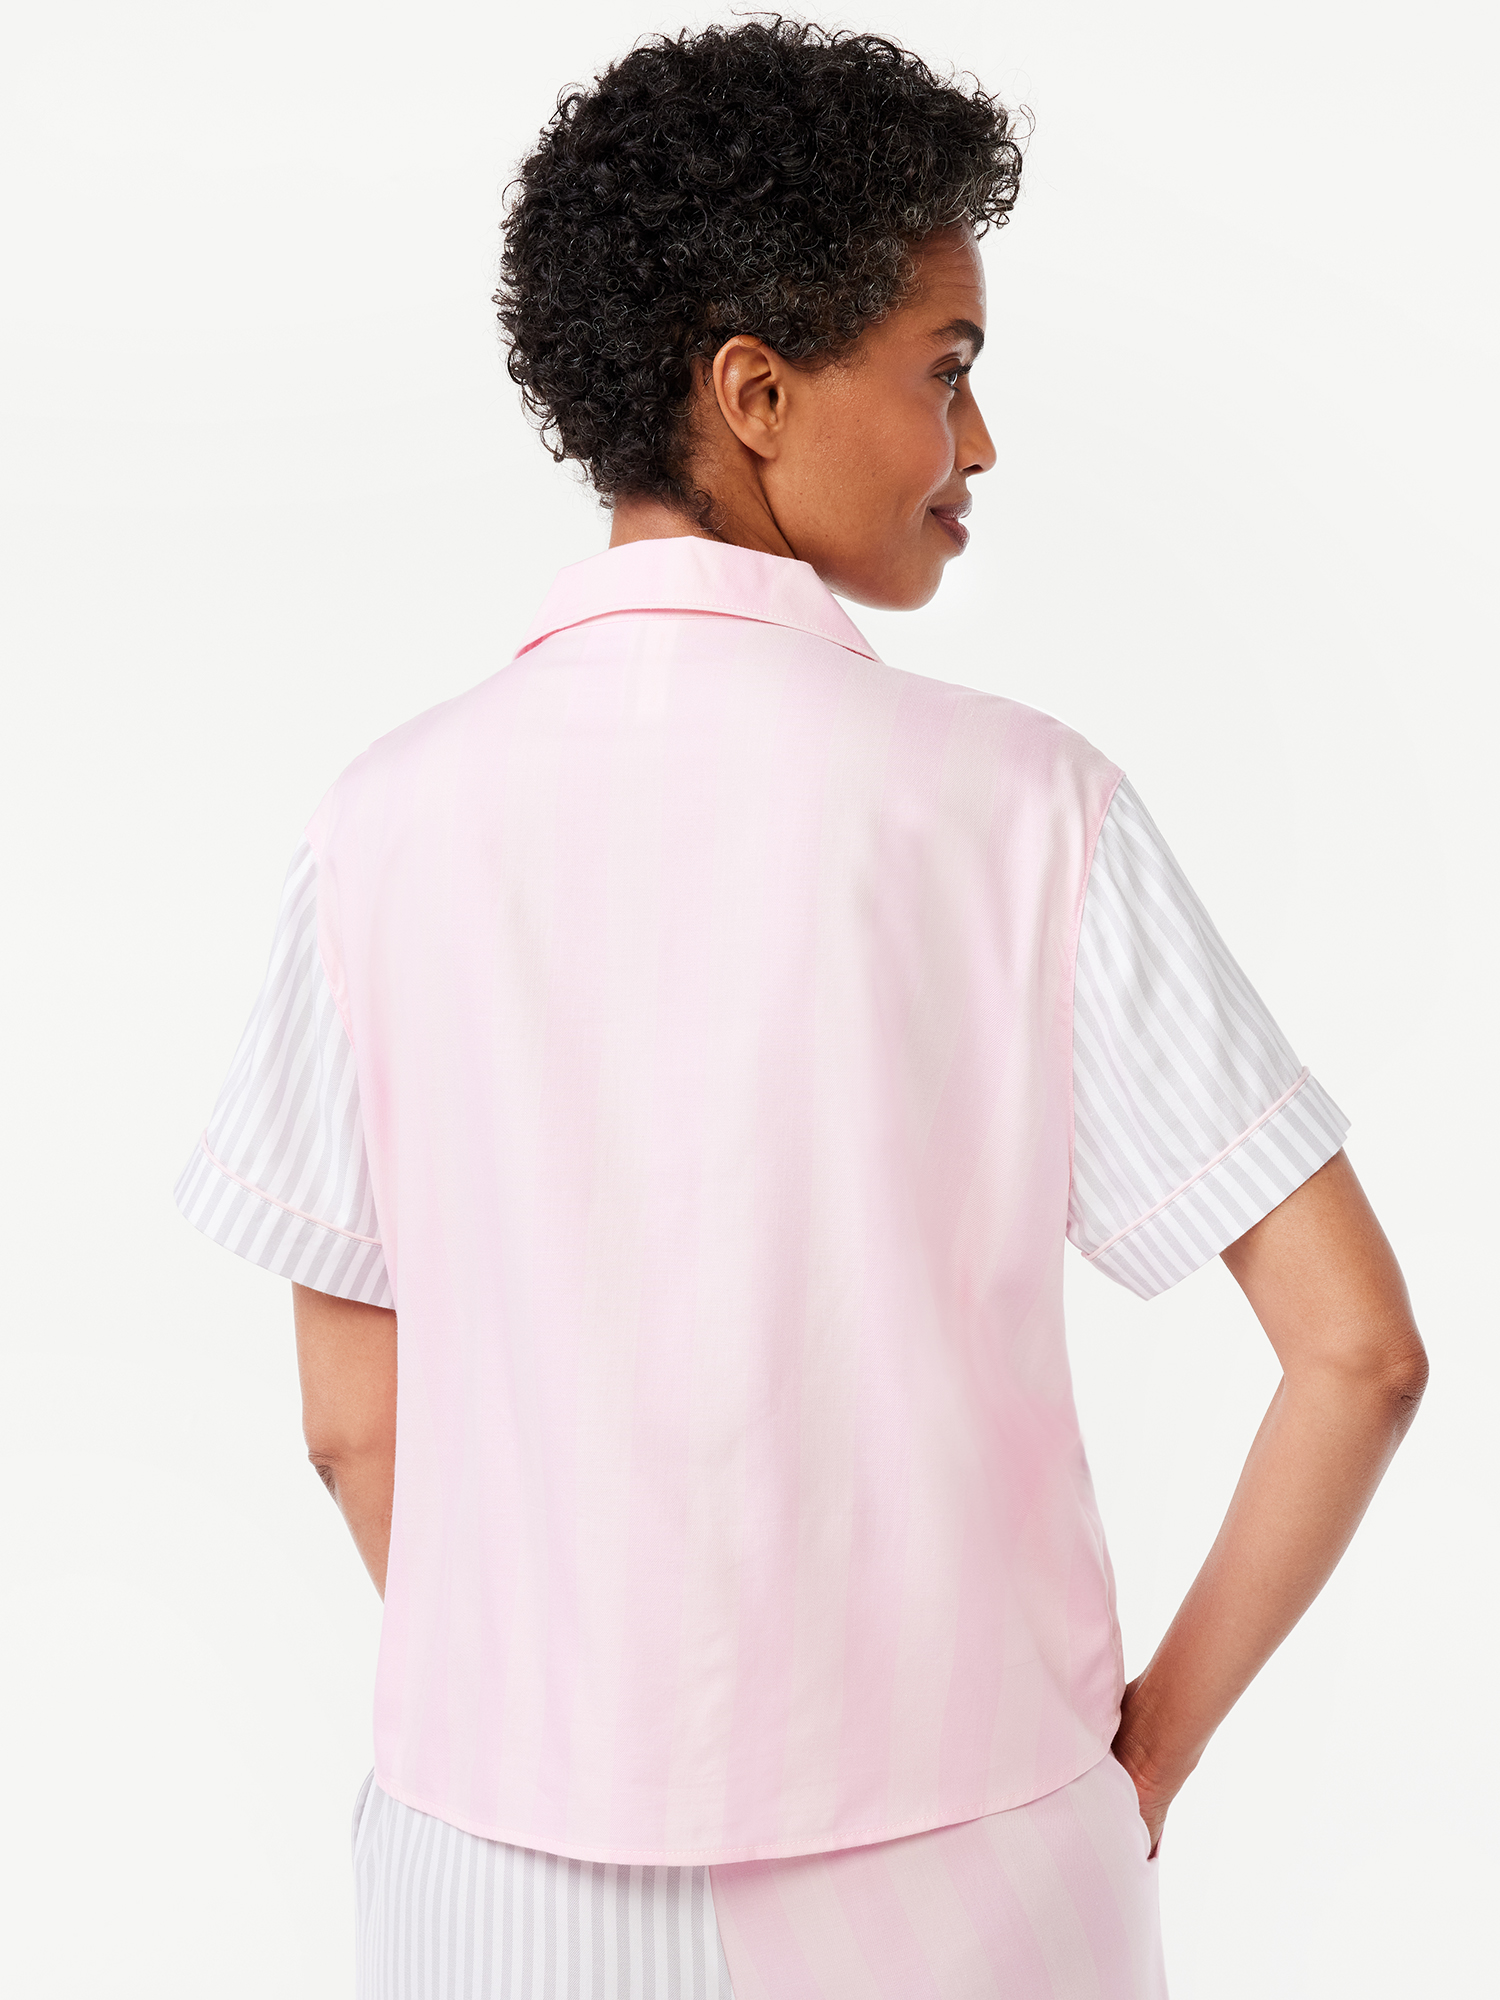 Joyspun Women's Woven Notch Collar Pajama Top, Sizes S to 3X - image 2 of 5